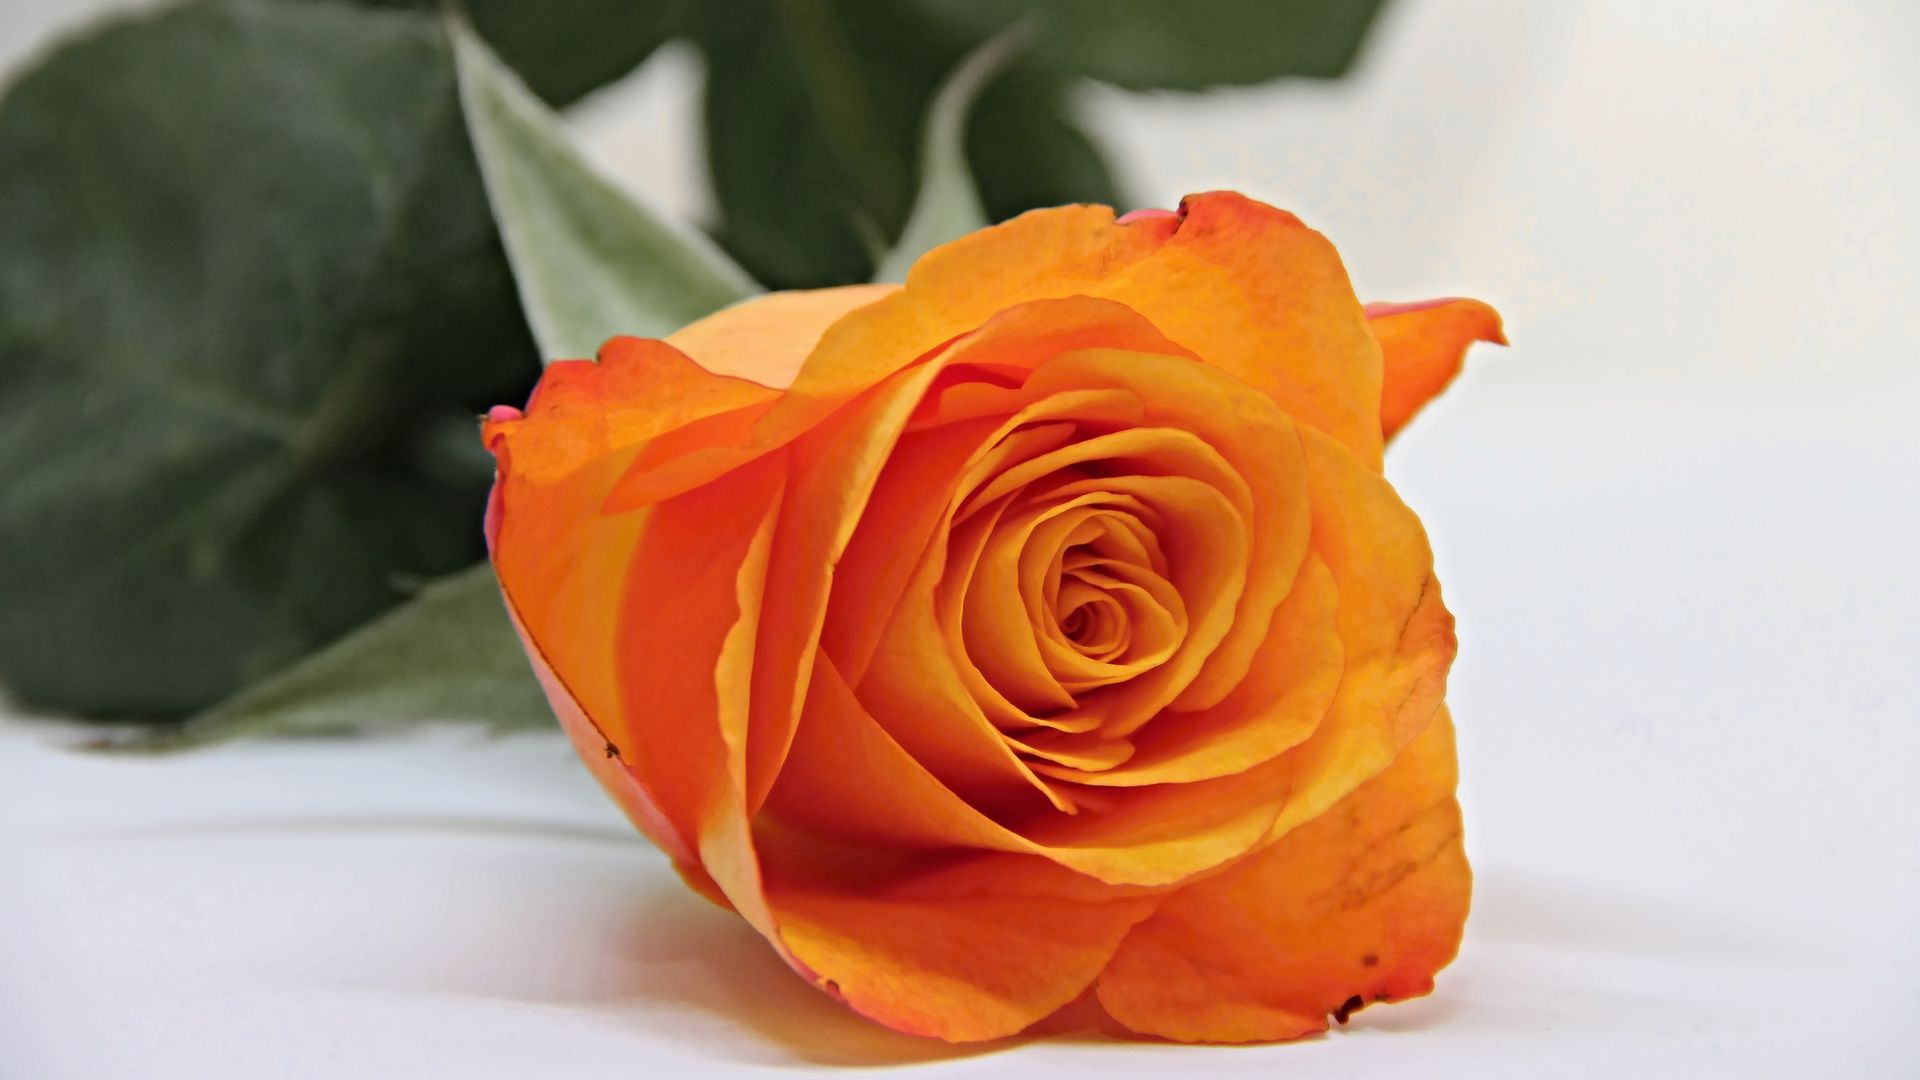 1920x1080 Desktop Wallpaper Orange Rose Bud Flower Hd Image Picture Background 49db1f